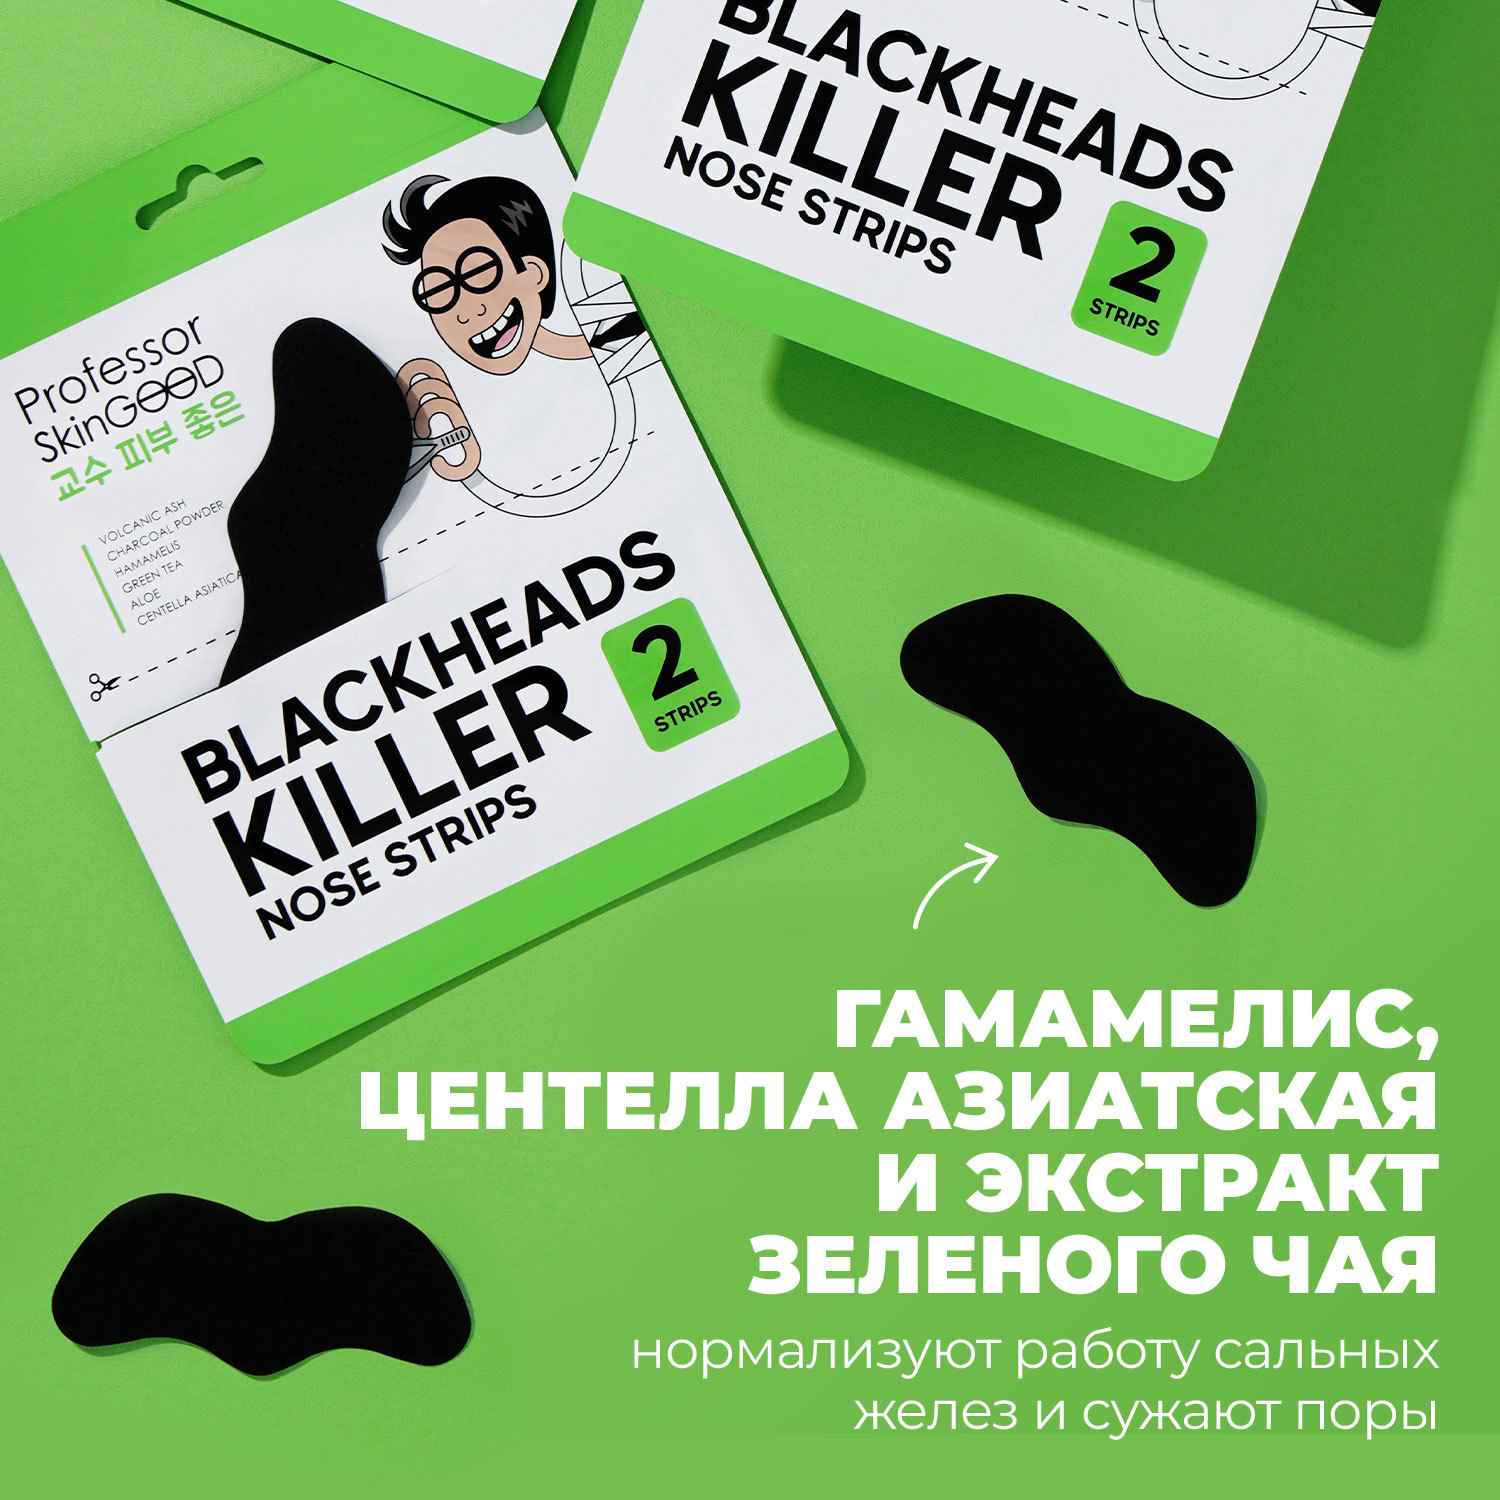 Полоски для носа Professor SkinGood Blackheads killer 2 шт - фото 4